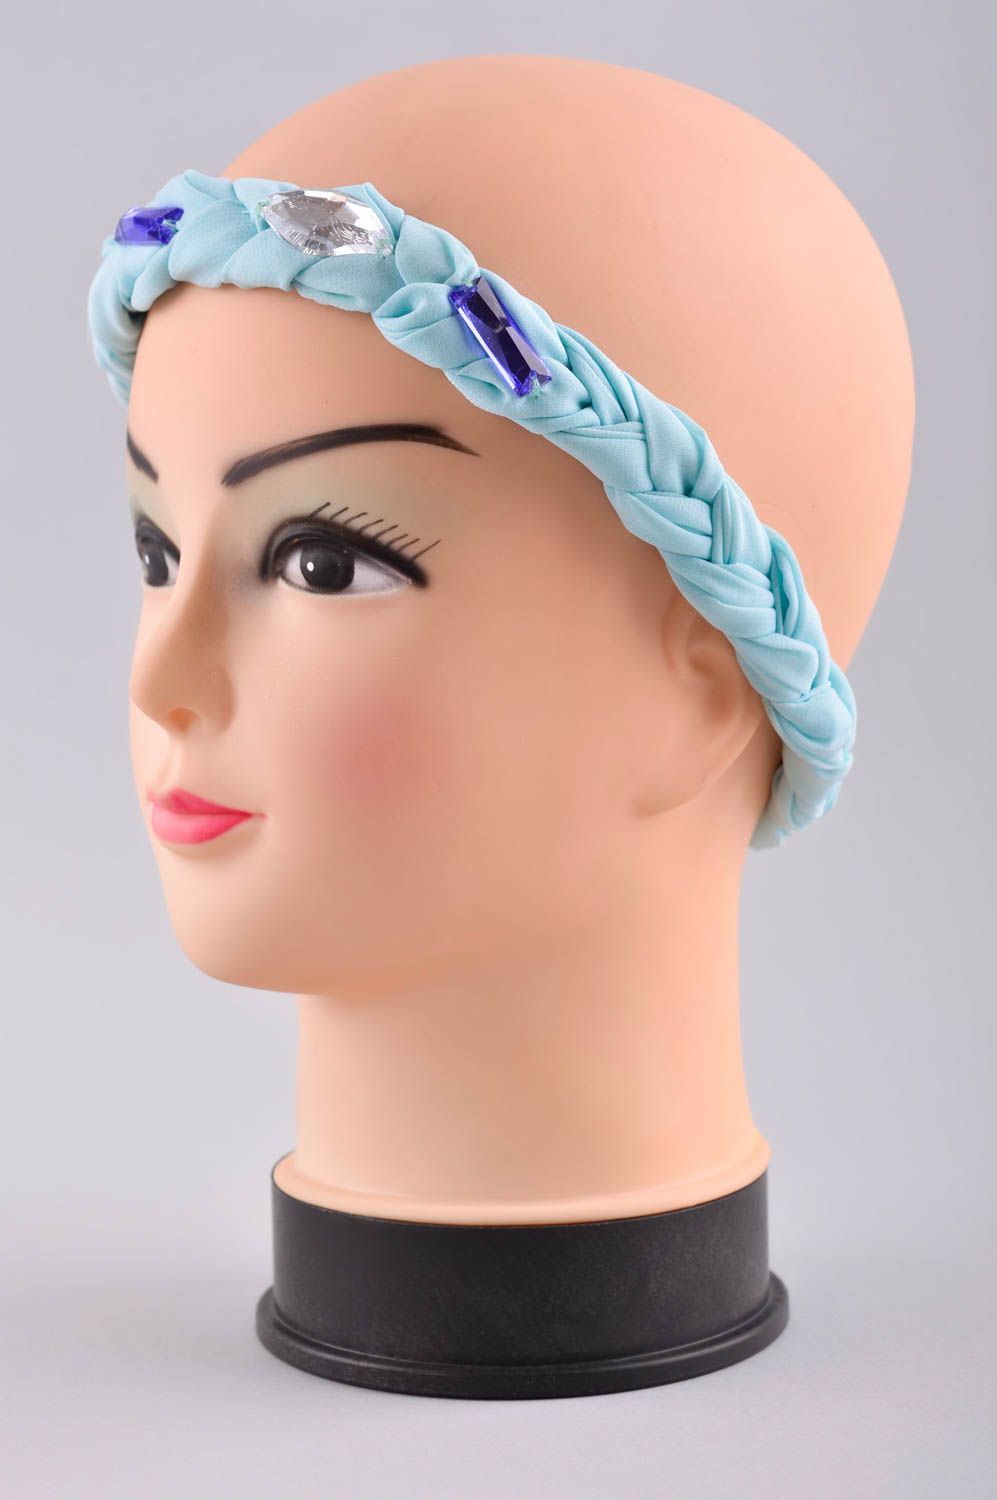 Homemade hair accessories girls headband hair decorations best gifts for women photo 2